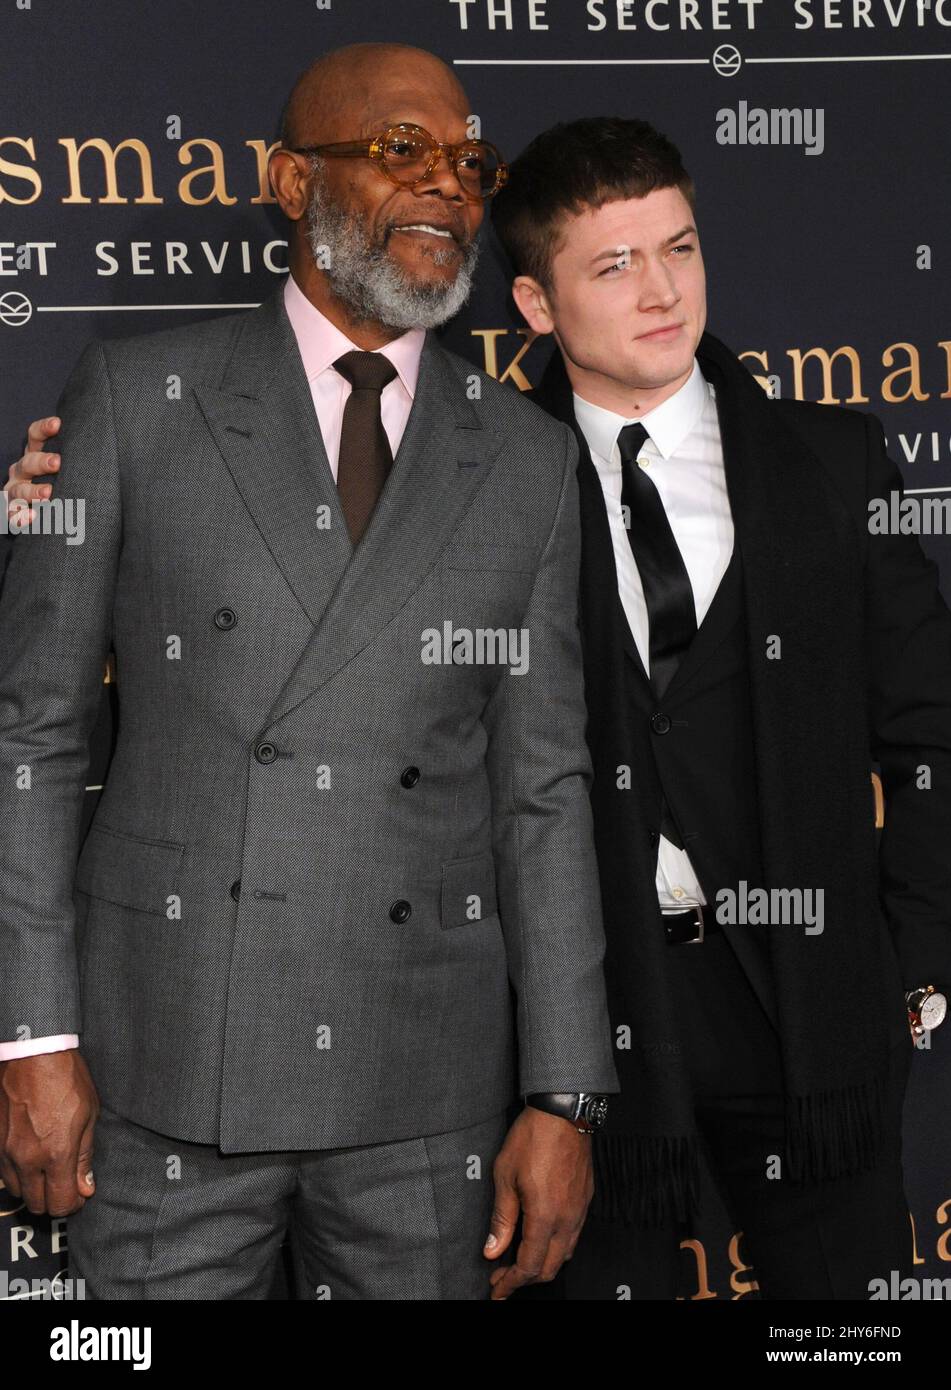 Samuel L. Jackson Hams It up in New 'Kingsman: The Secret Service' Trailer  – The Hollywood Reporter